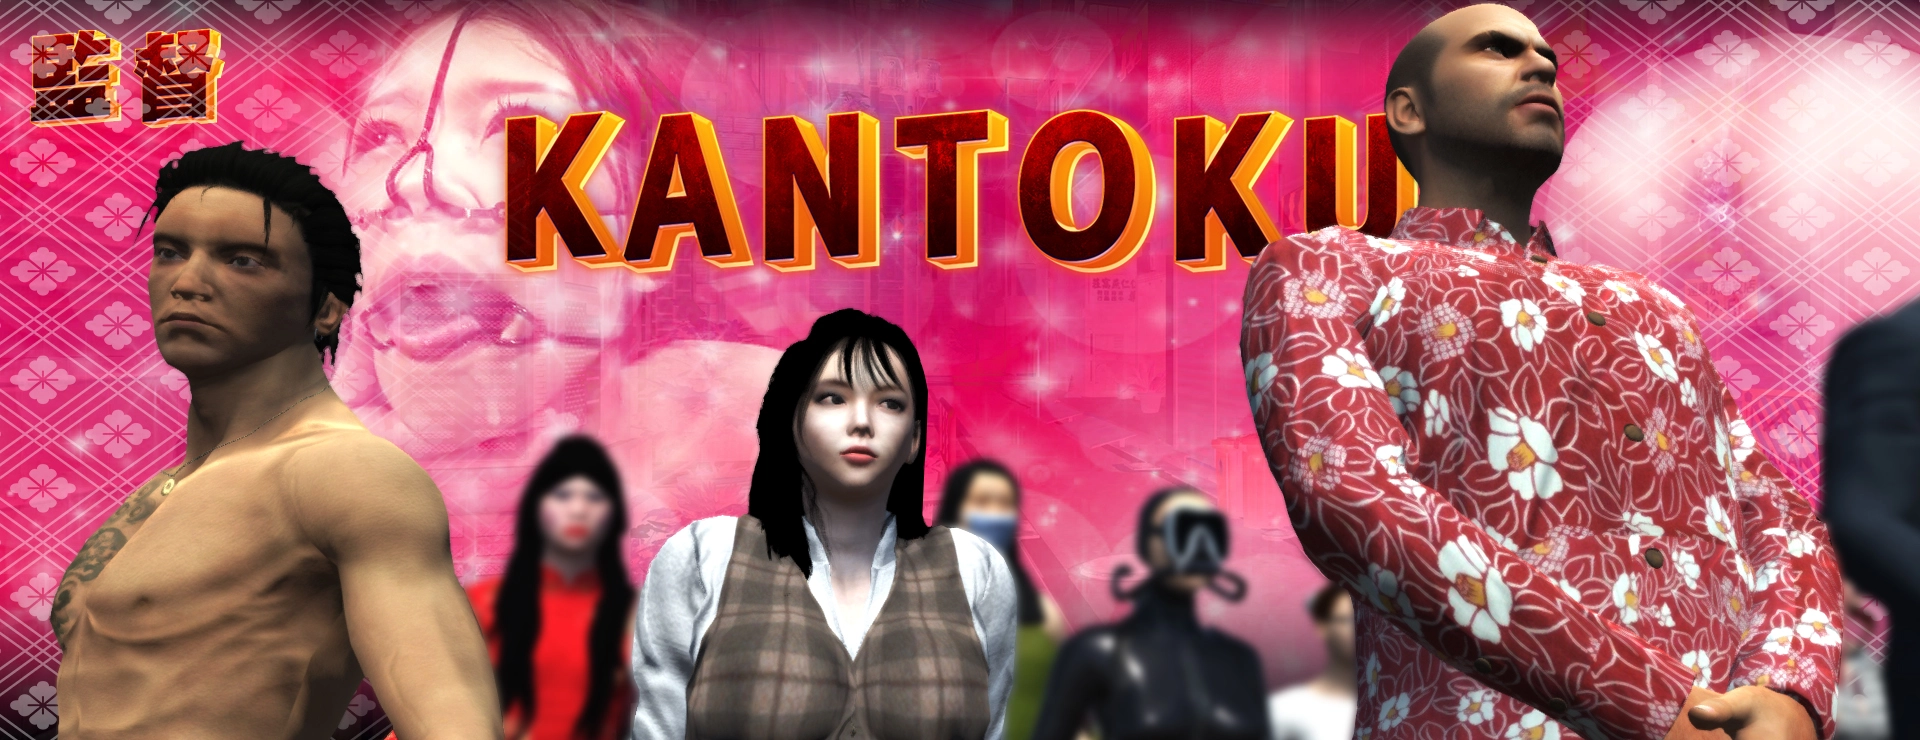 Kantoku main image